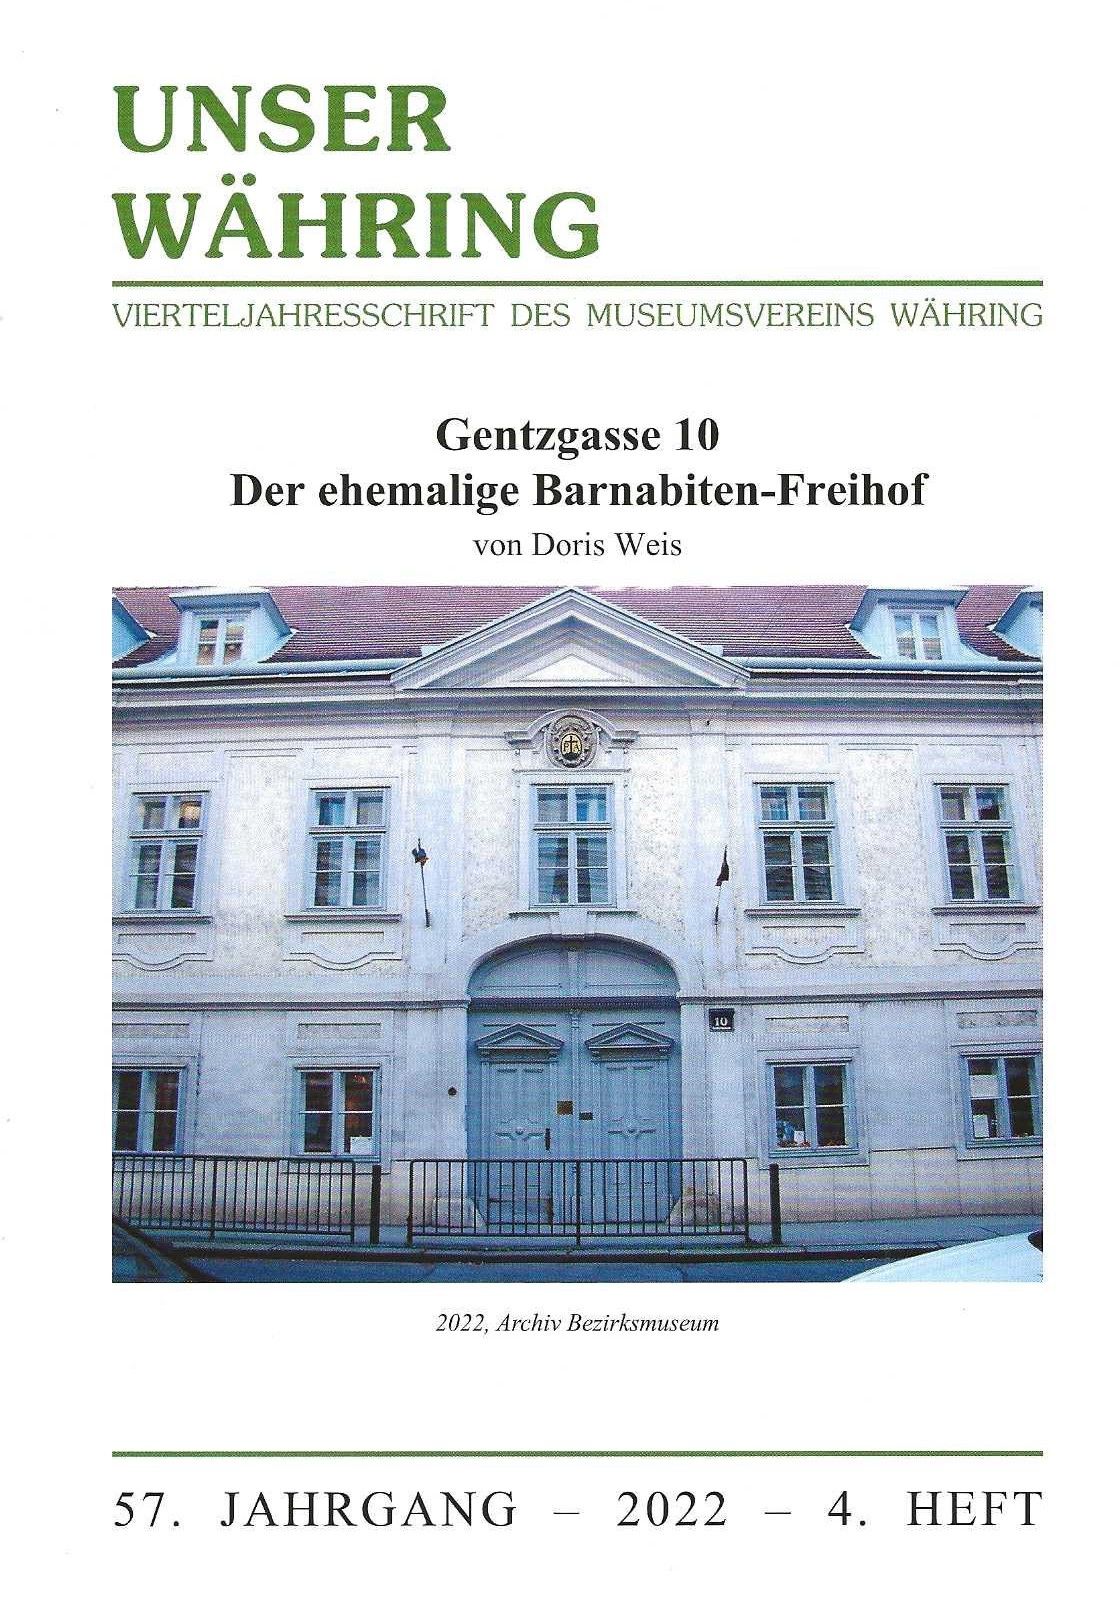 Publikation: Gentzgasse 10. Der ehemalige Barnabiten-Freihof, Bezirksmuseum Währing